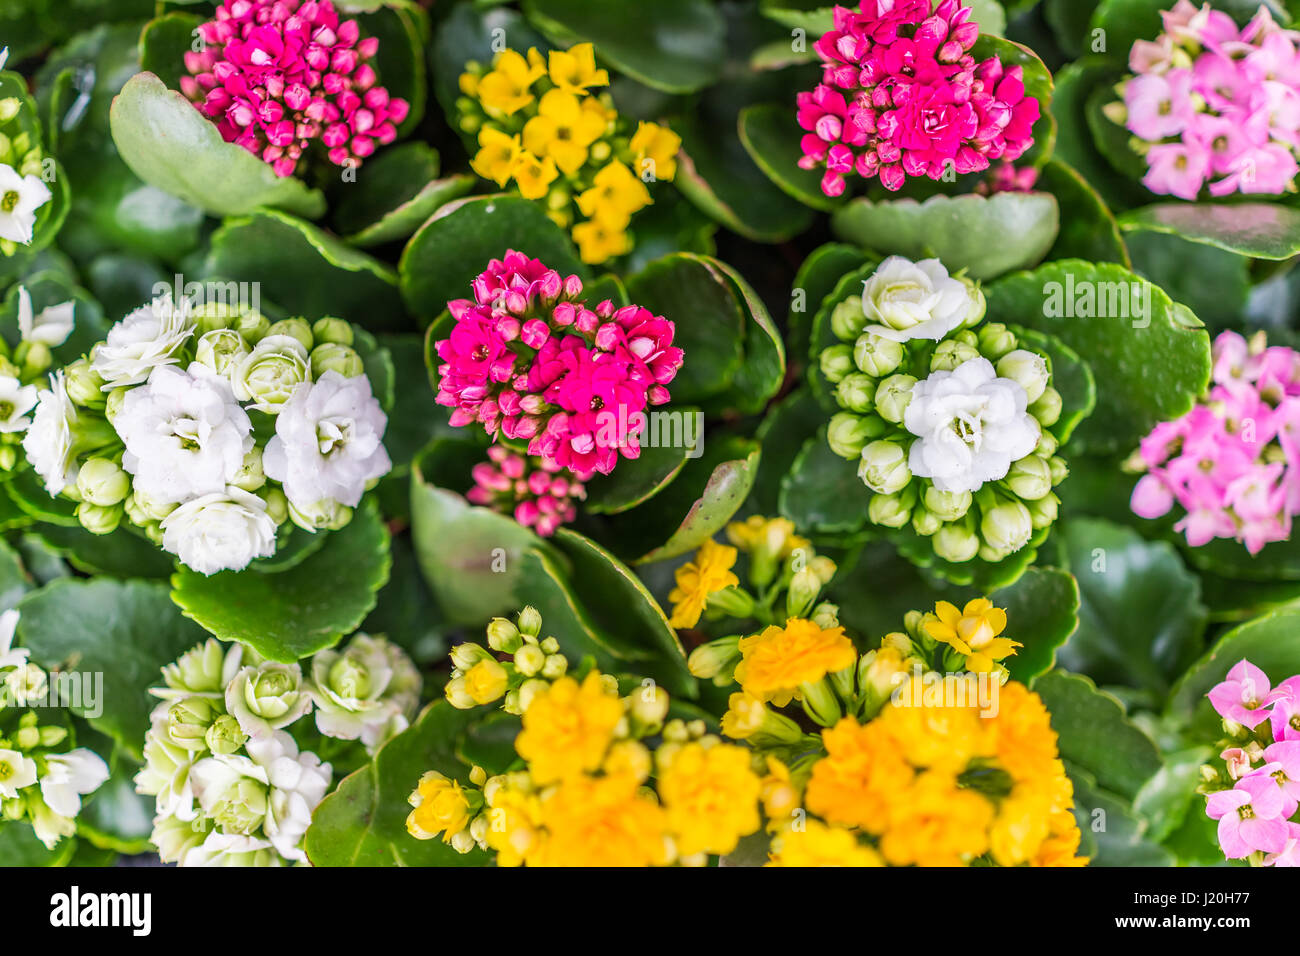 Calandiva flowers on display in pots Stock Photo